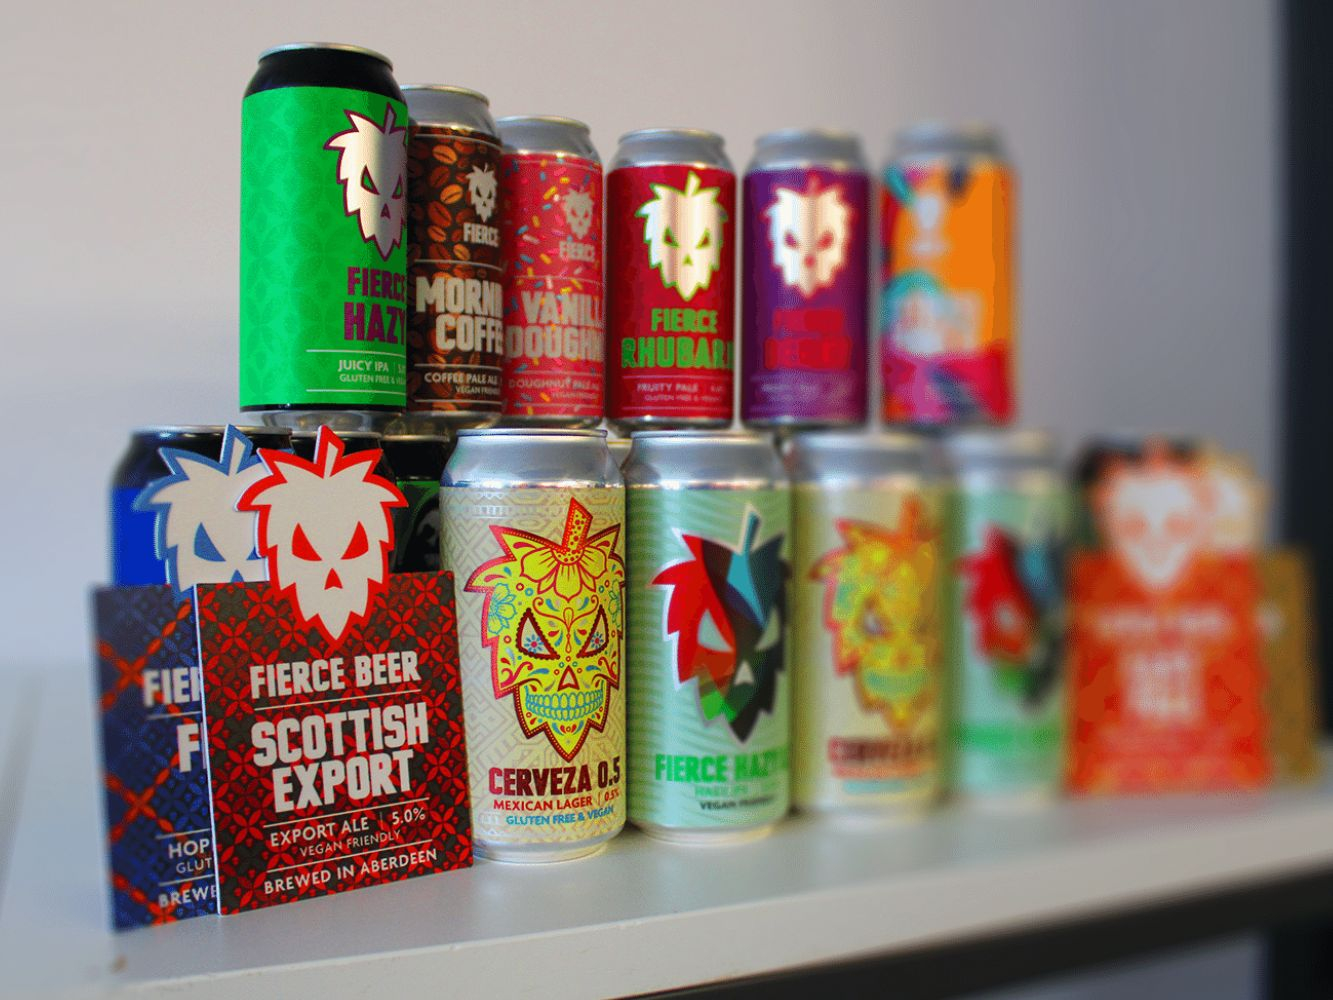 Fierce Beer cans